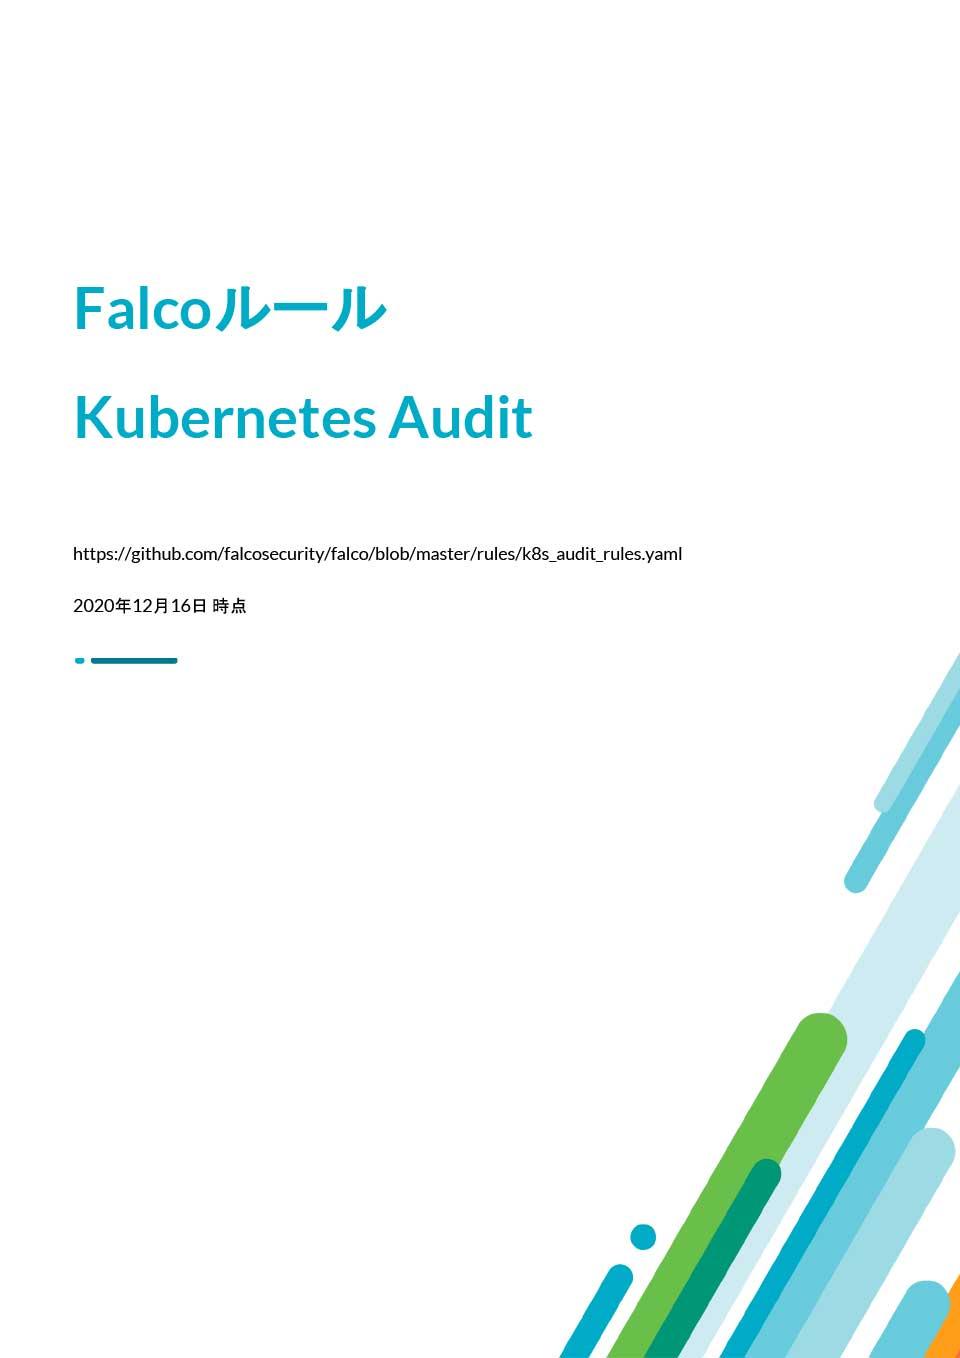 「Falcoルール Kubernetes Audit」を公開しました